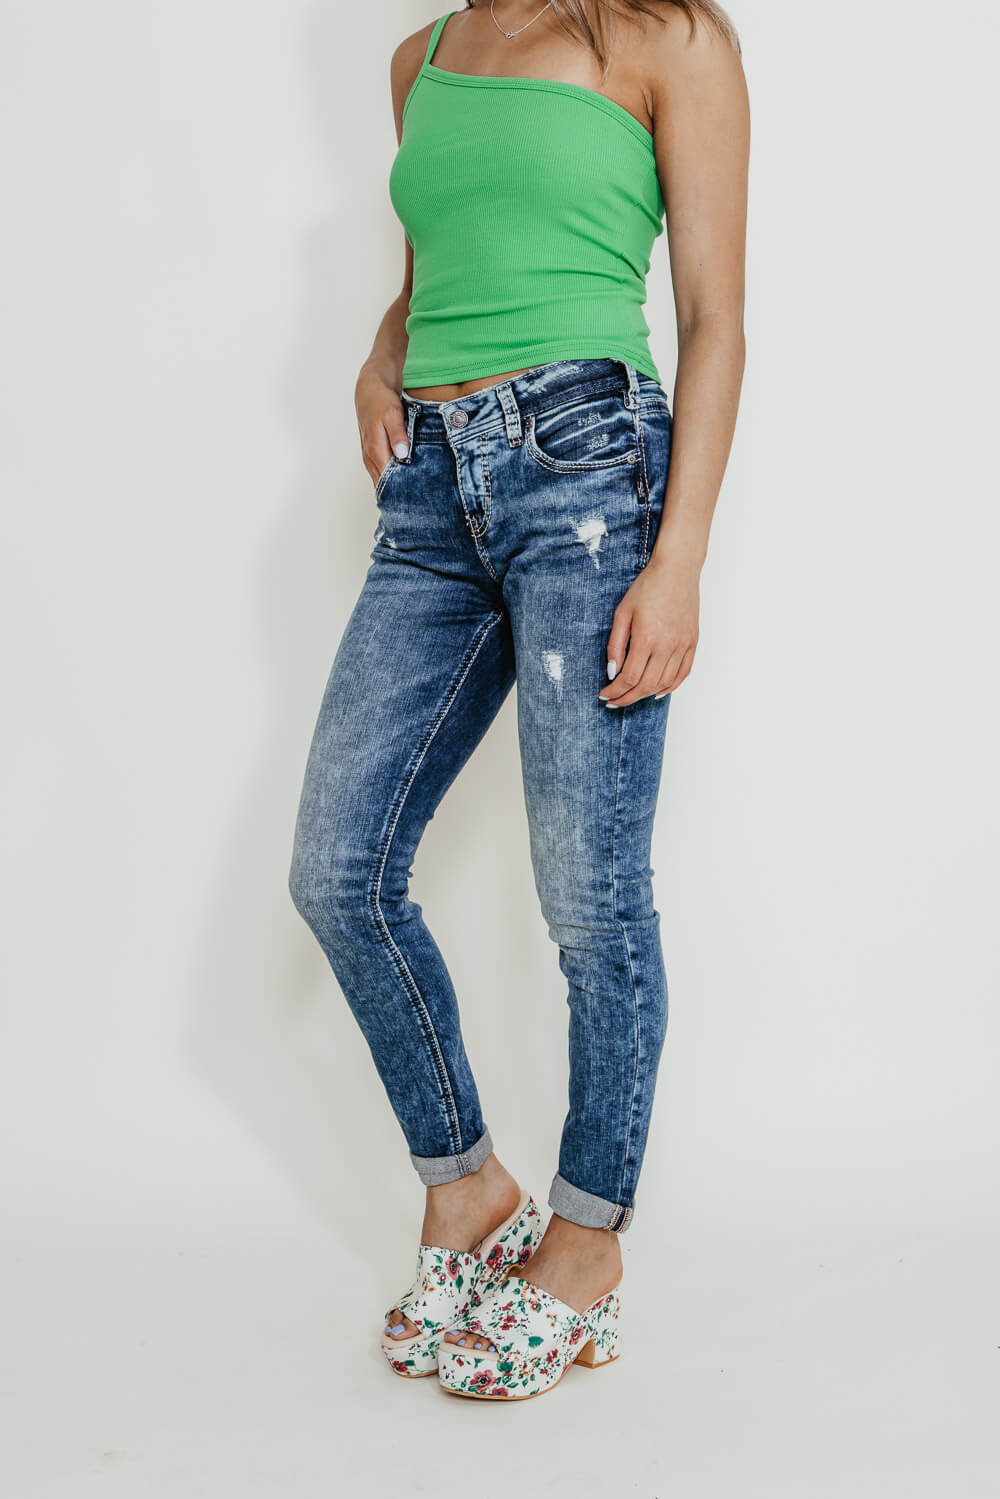 712 Slim Women's Jeans - Medium Wash